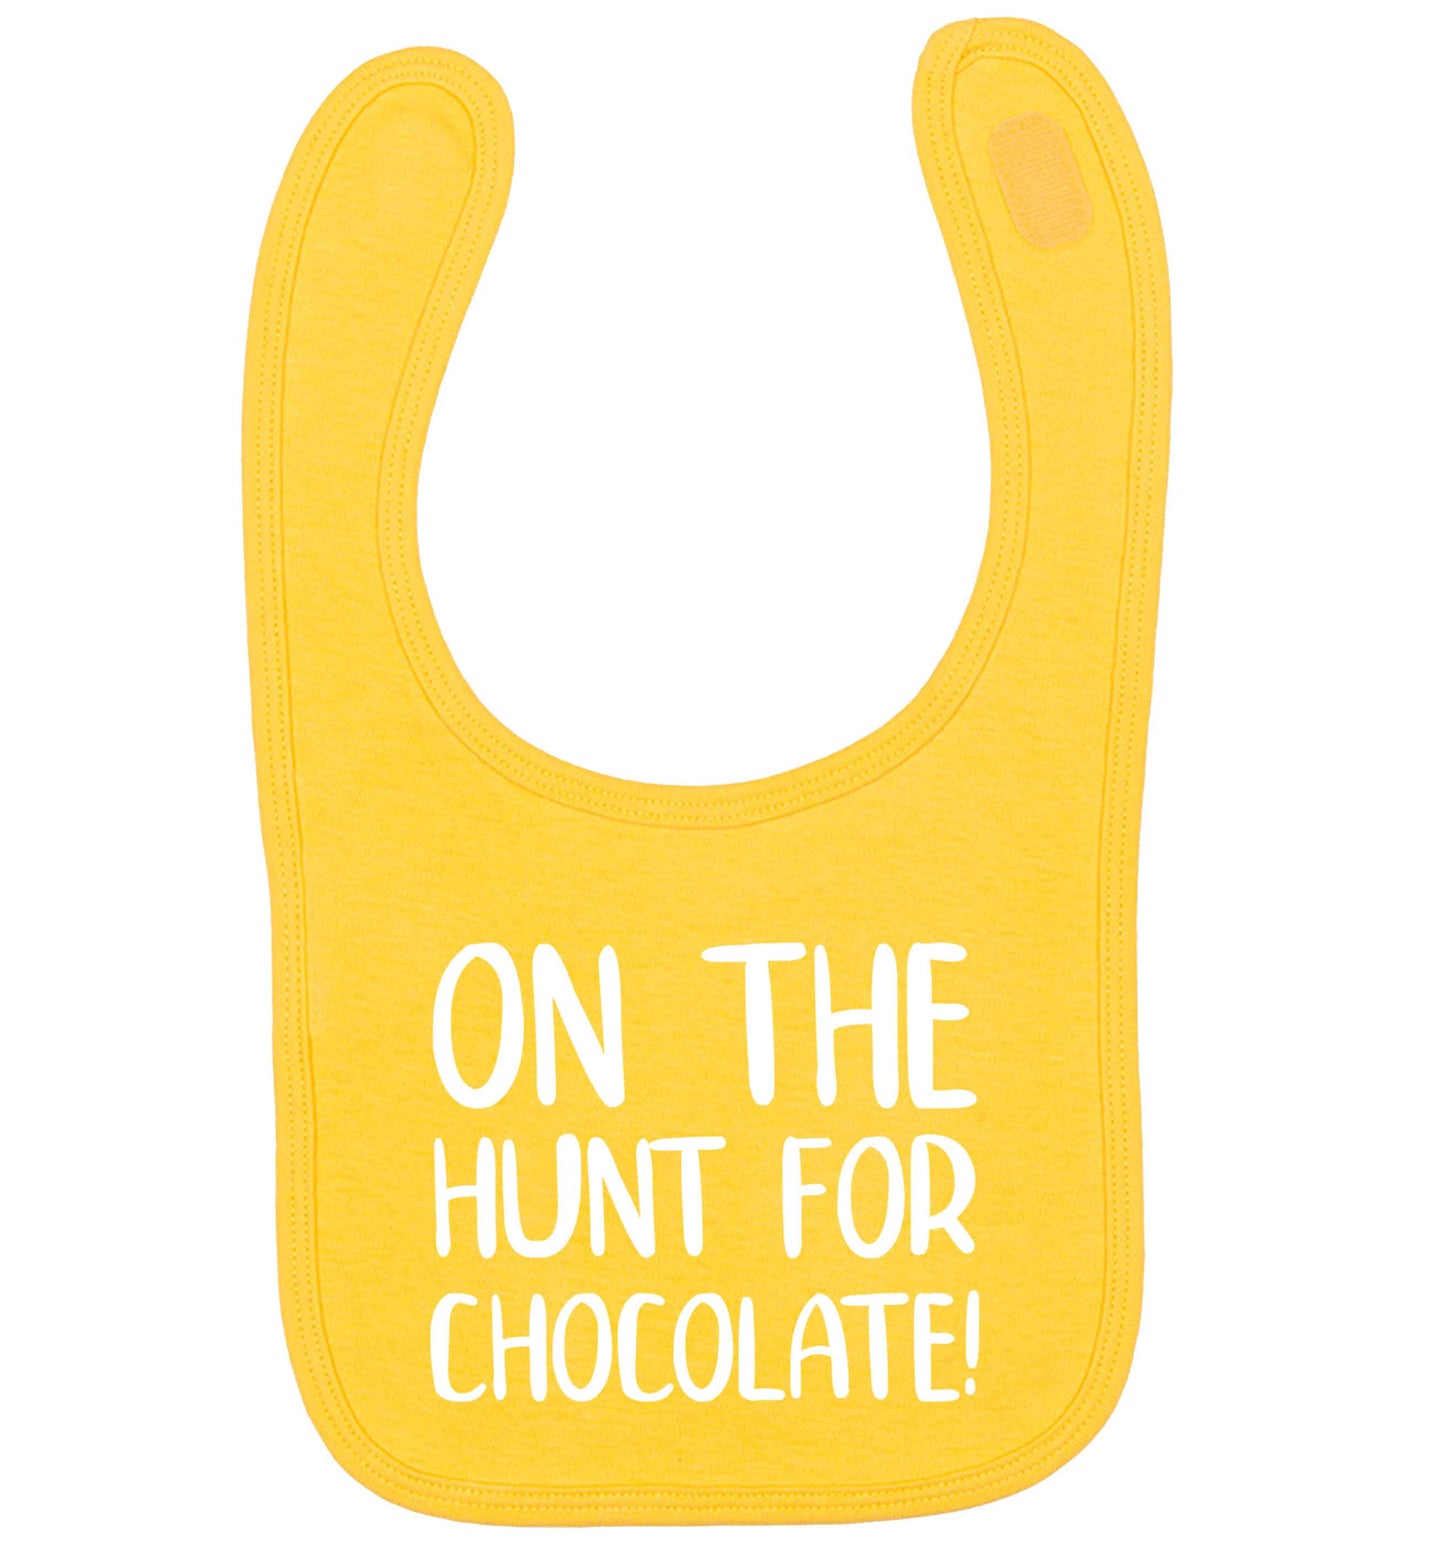 On the hunt for chocolate! yellow baby bib